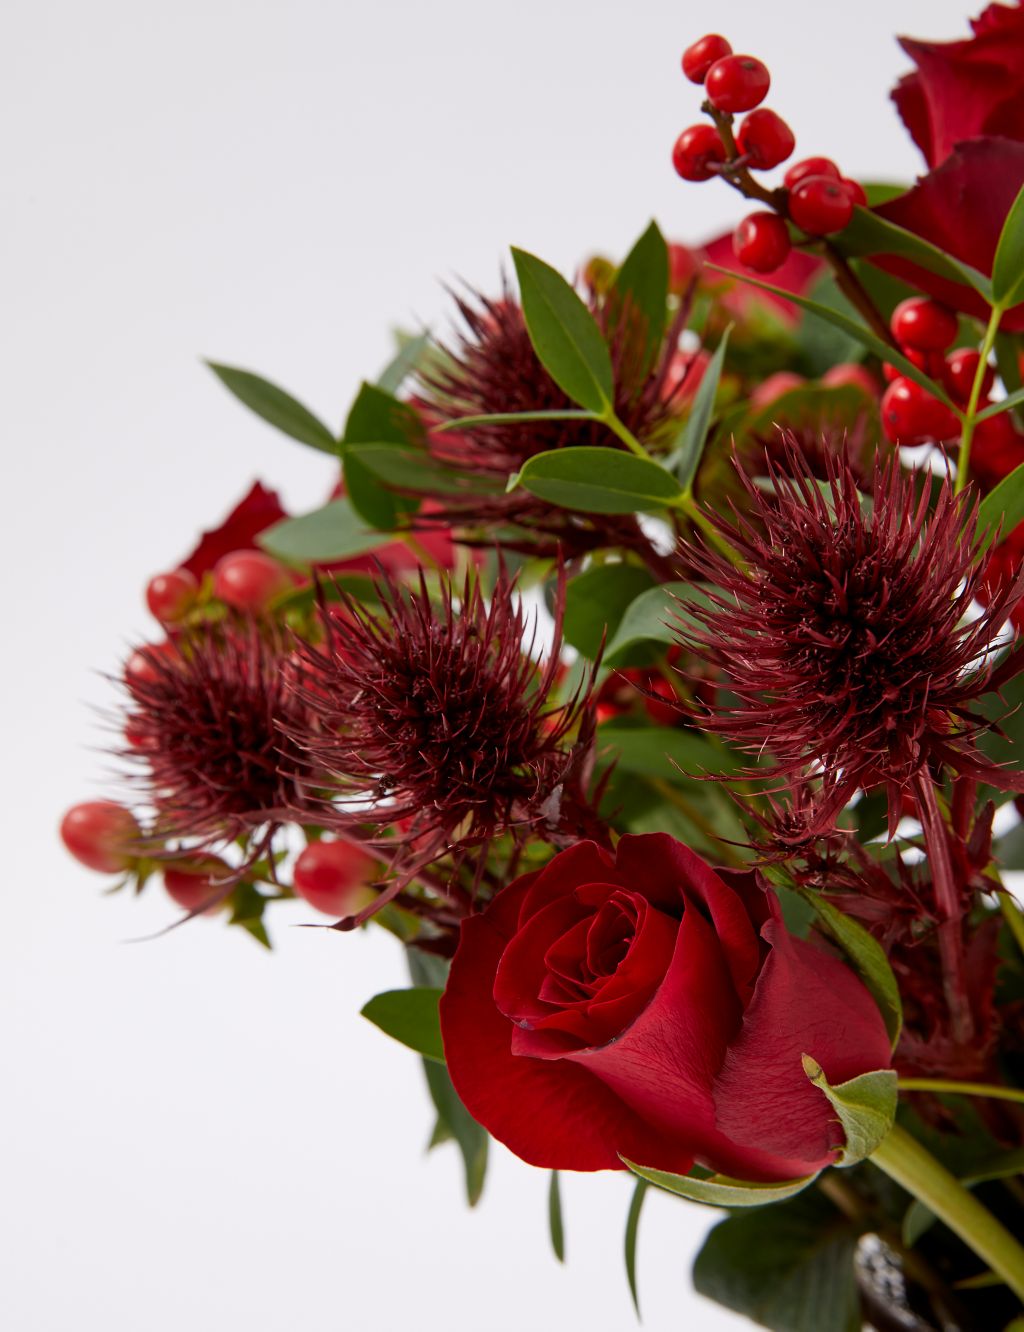 Festive Red Rose Bouquet in Vase image 4